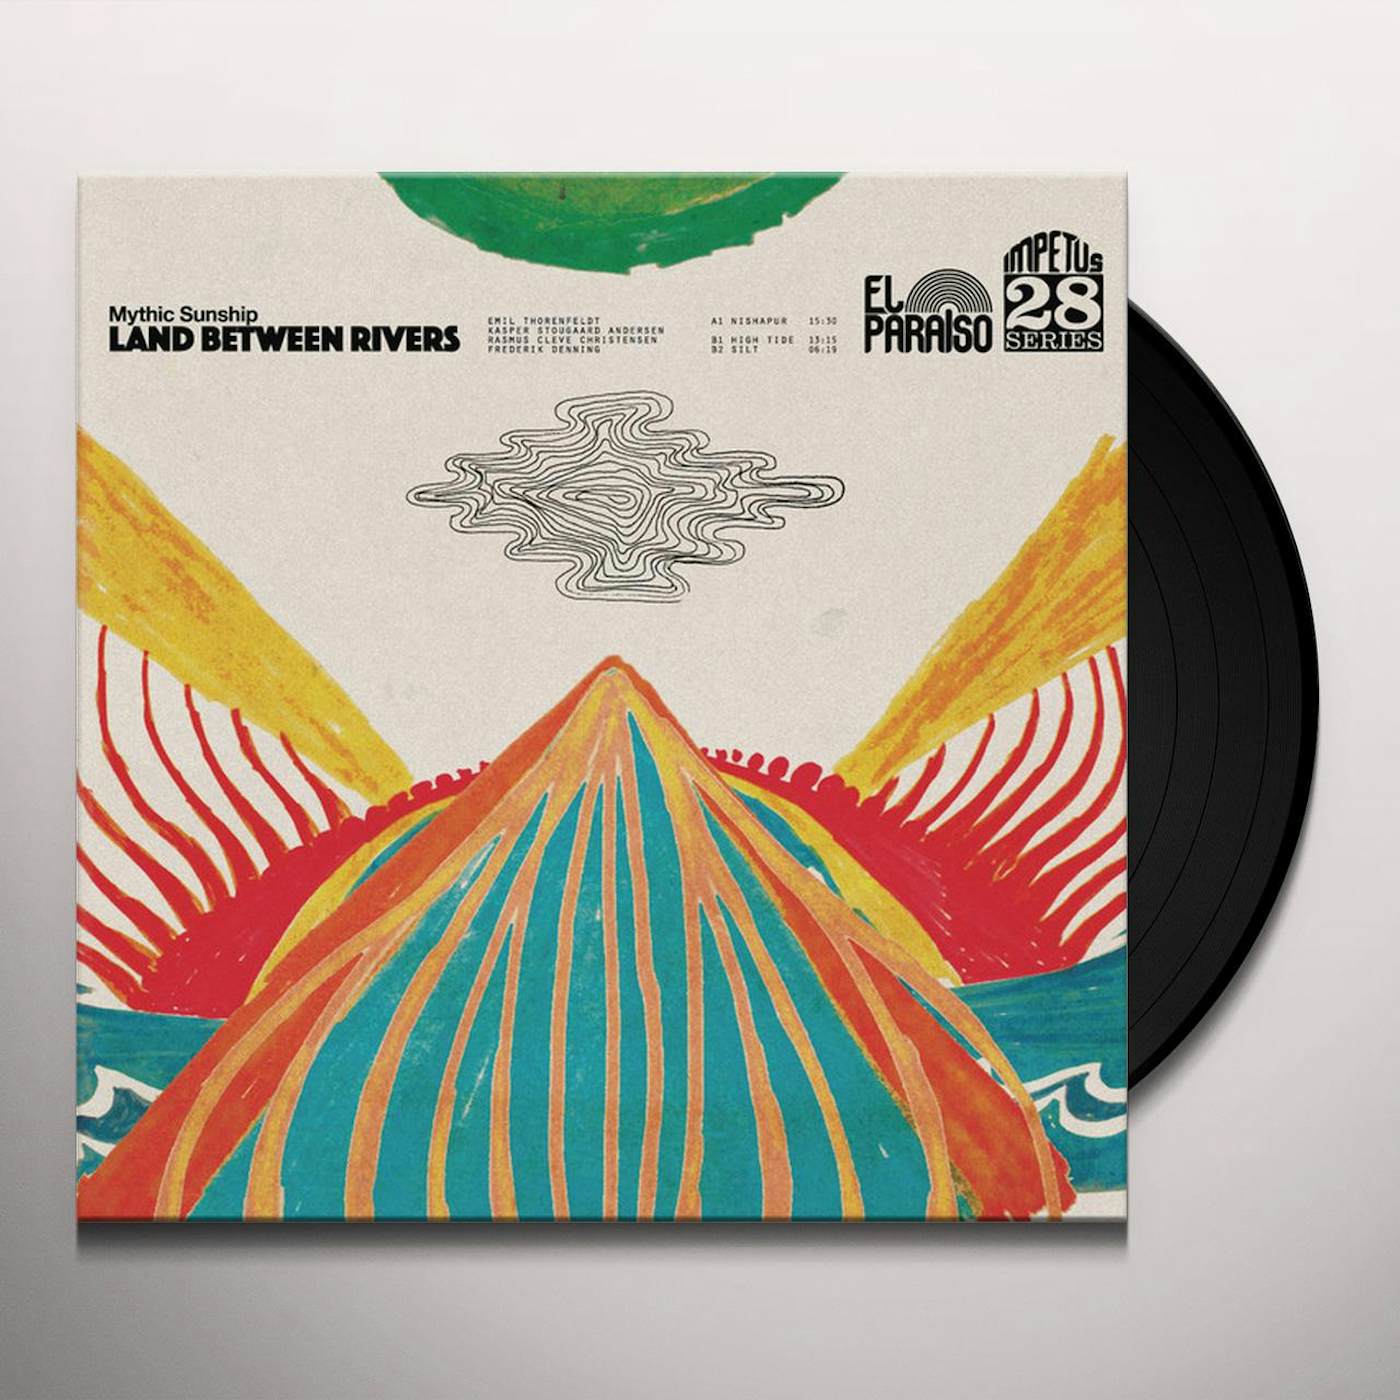 Mythic Sunship Land Between Rivers Vinyl Record